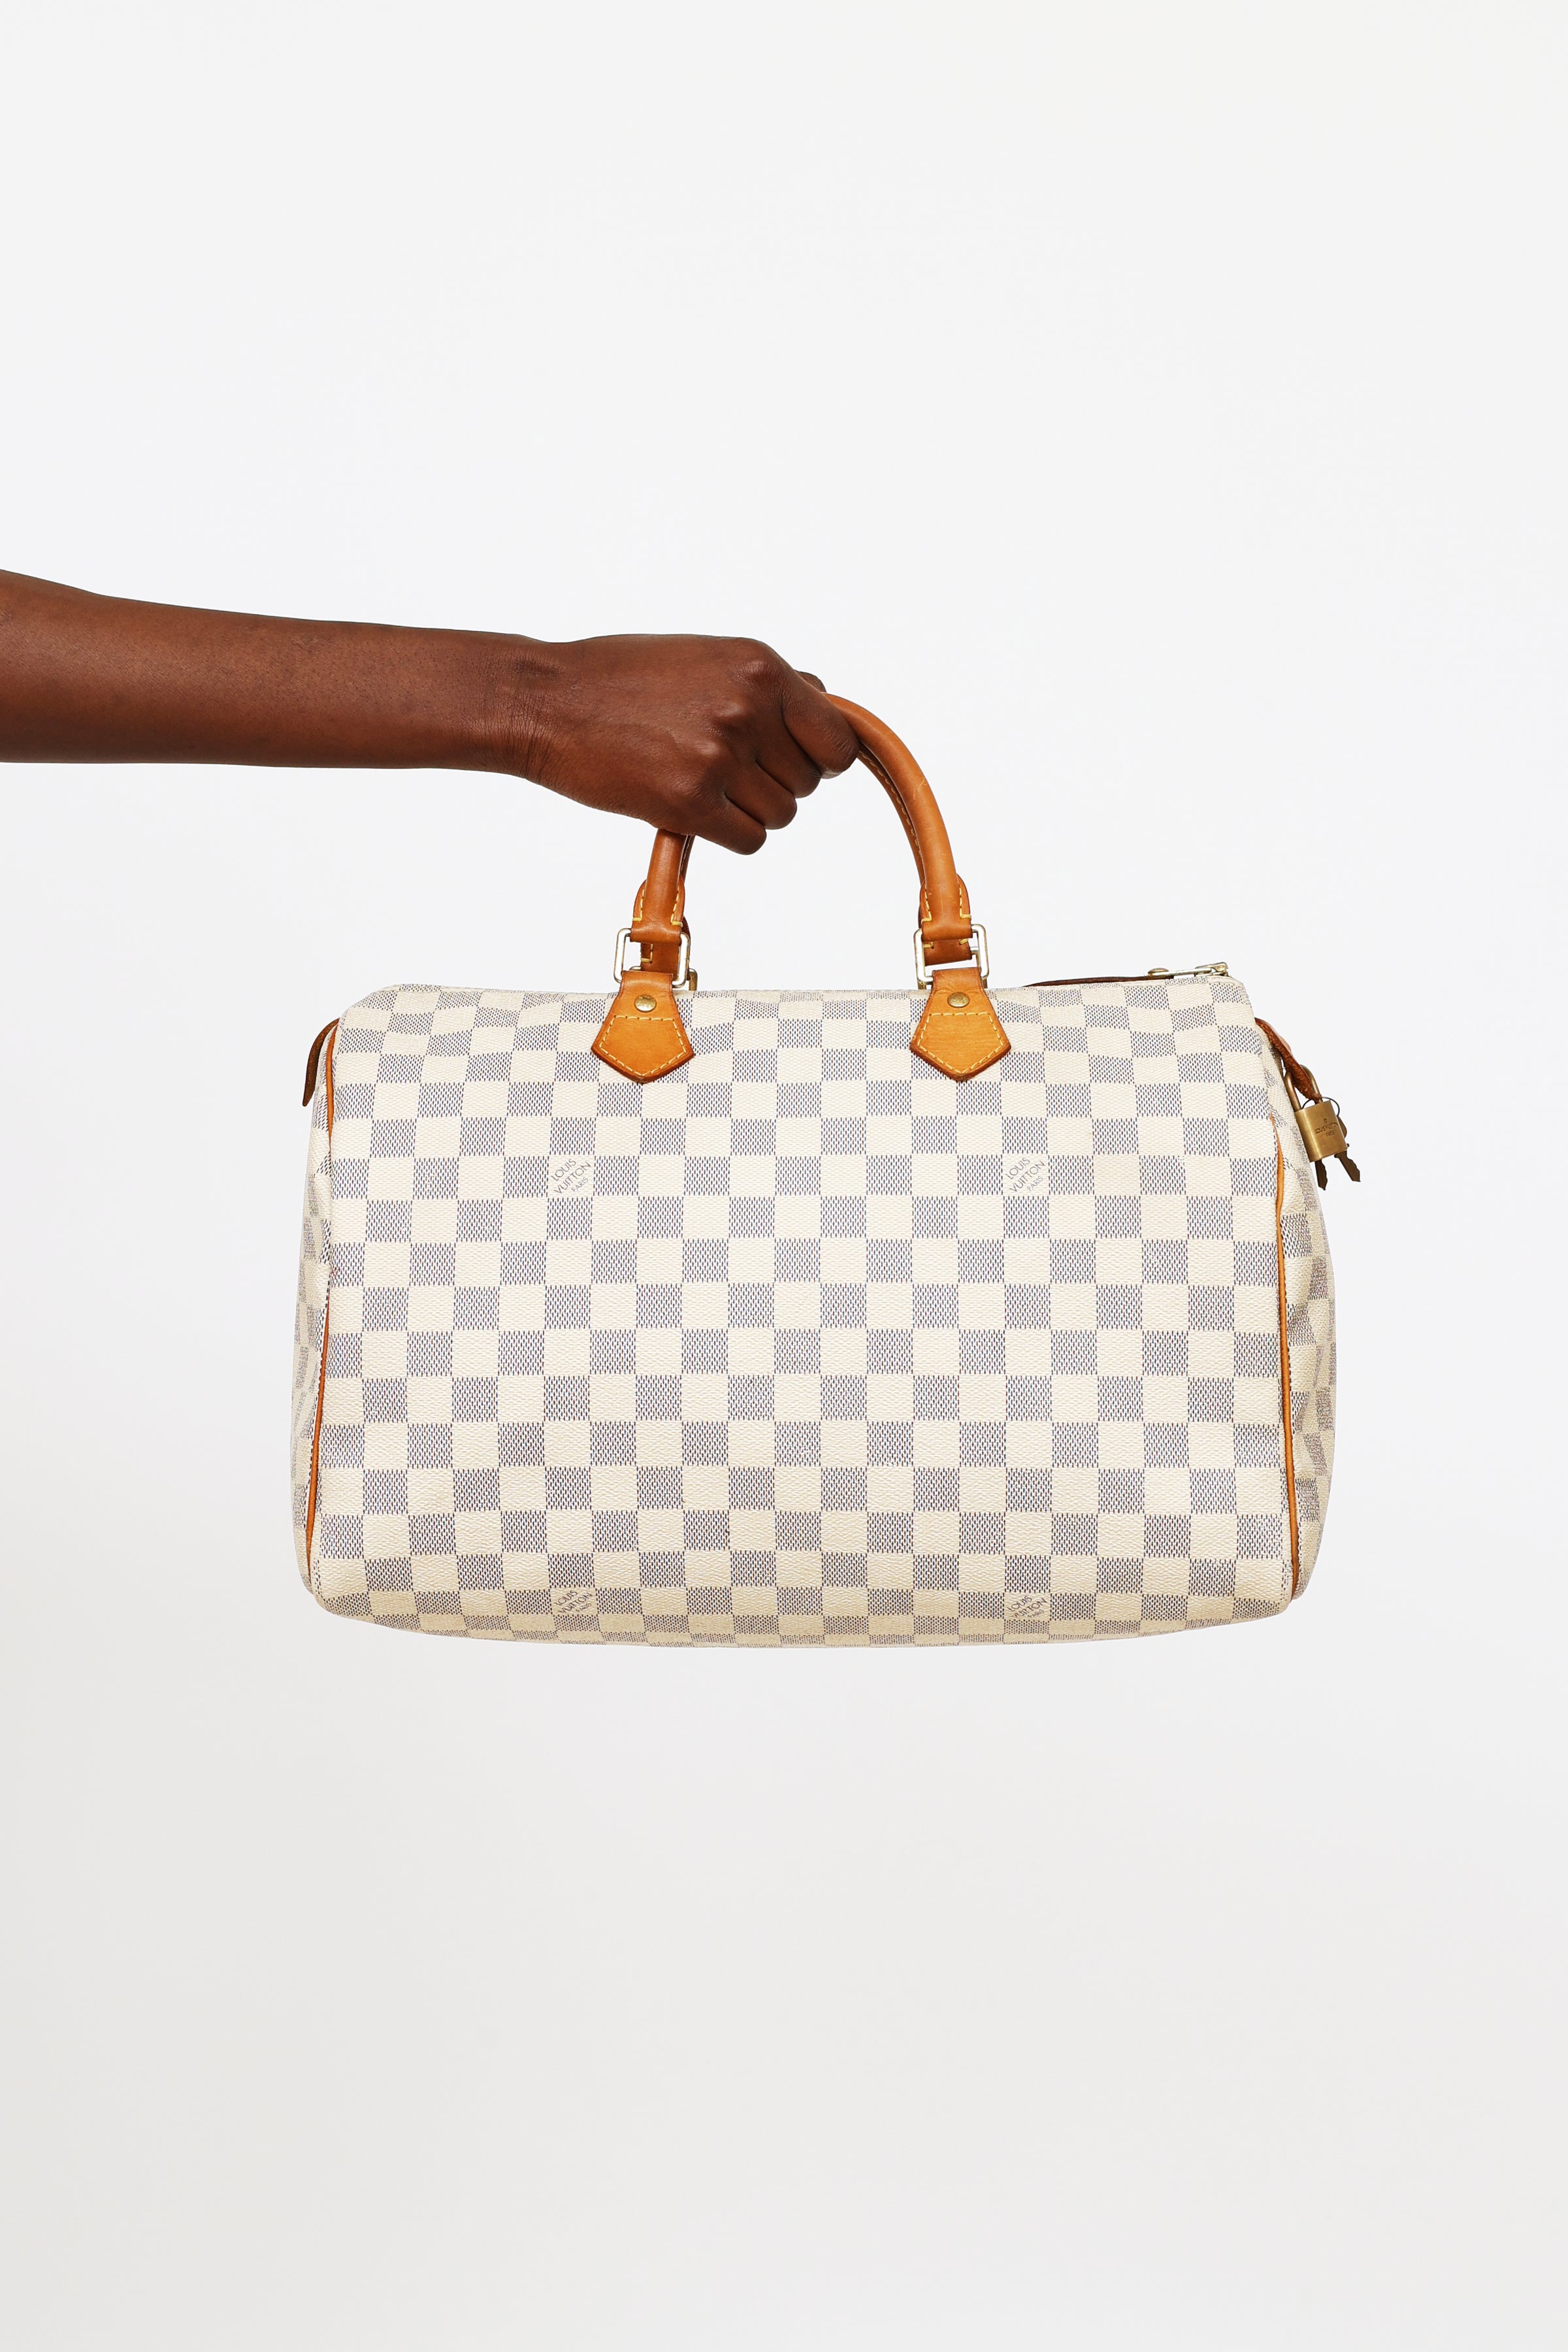 Louis Vuitton // 2009 Damier Azur Speedy 35 Handbag – VSP Consignment